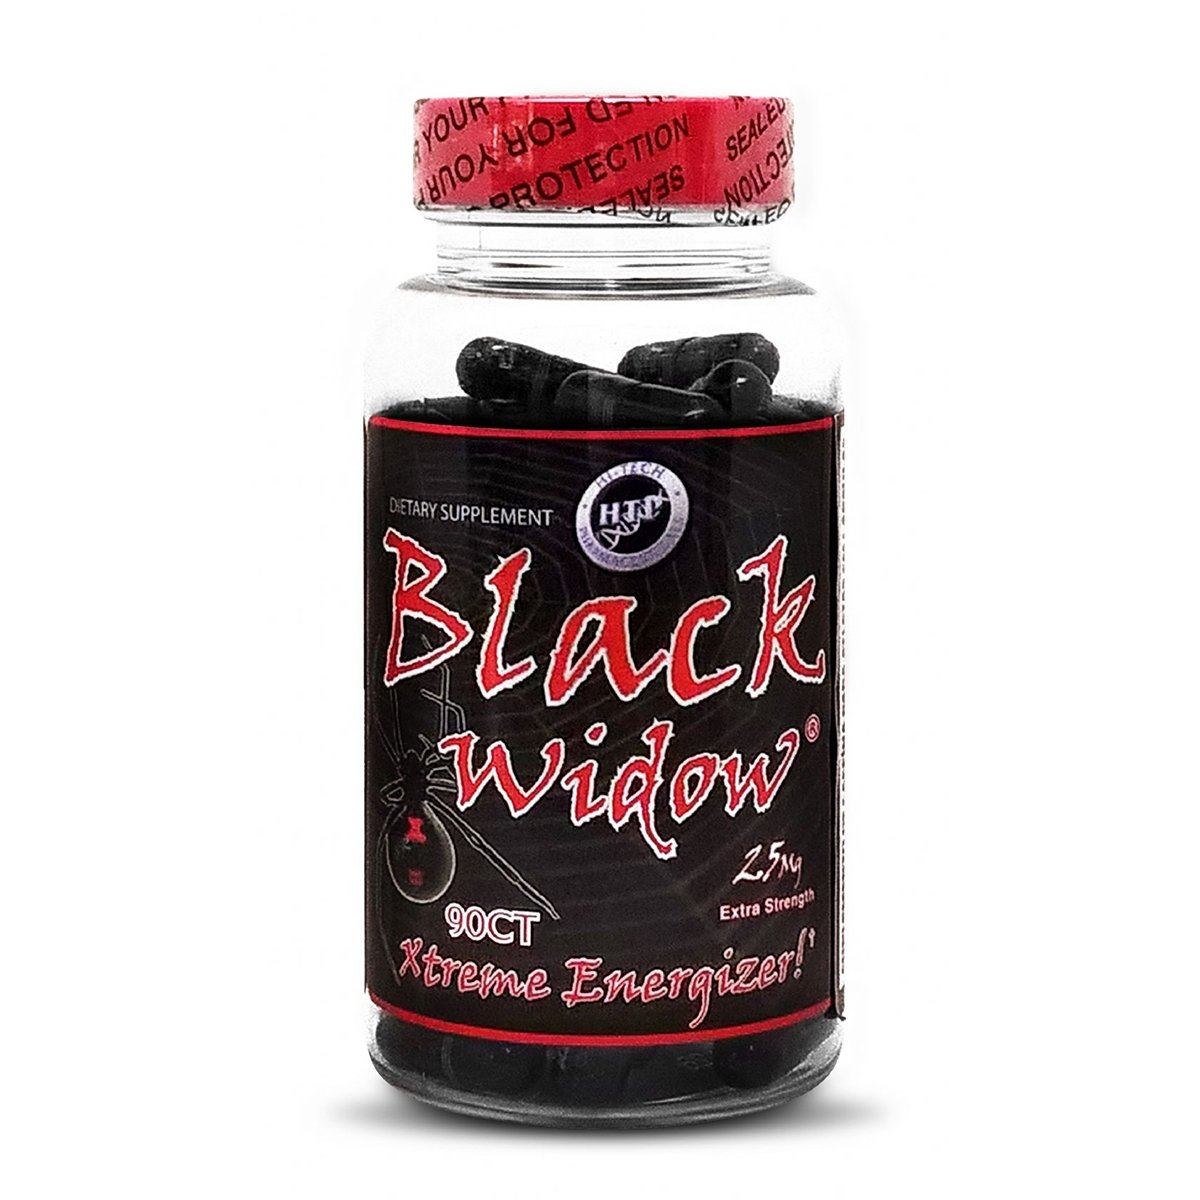 Black Widow 25 Mg